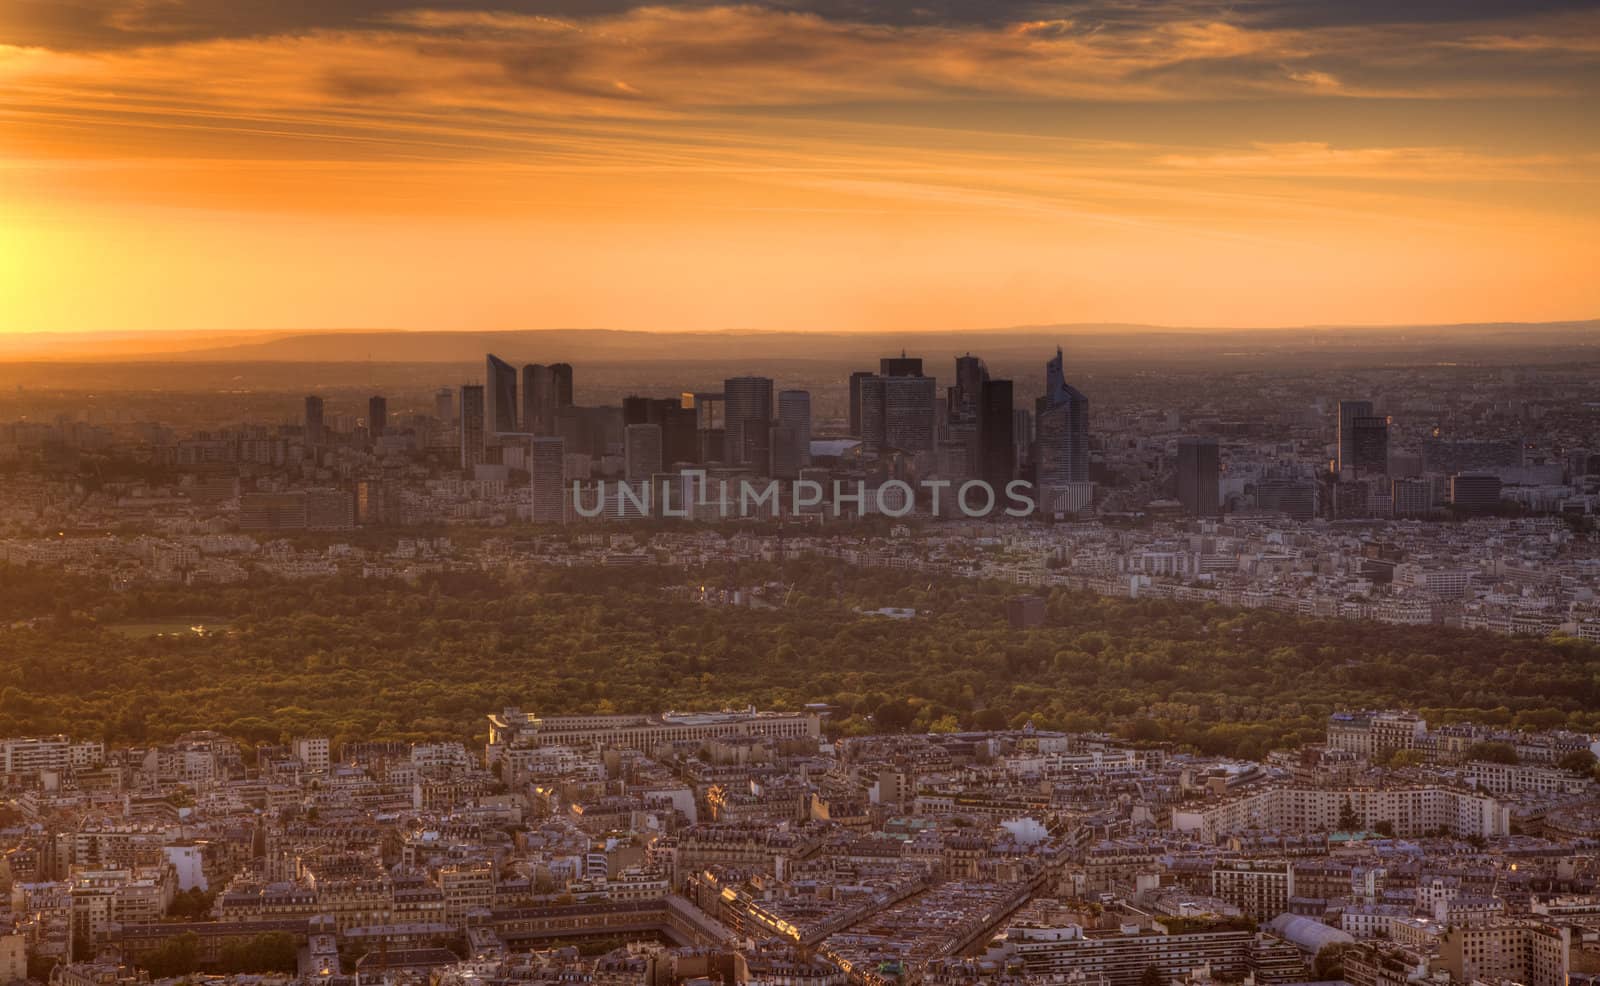 Paris at Dusk by RazvanPhotography